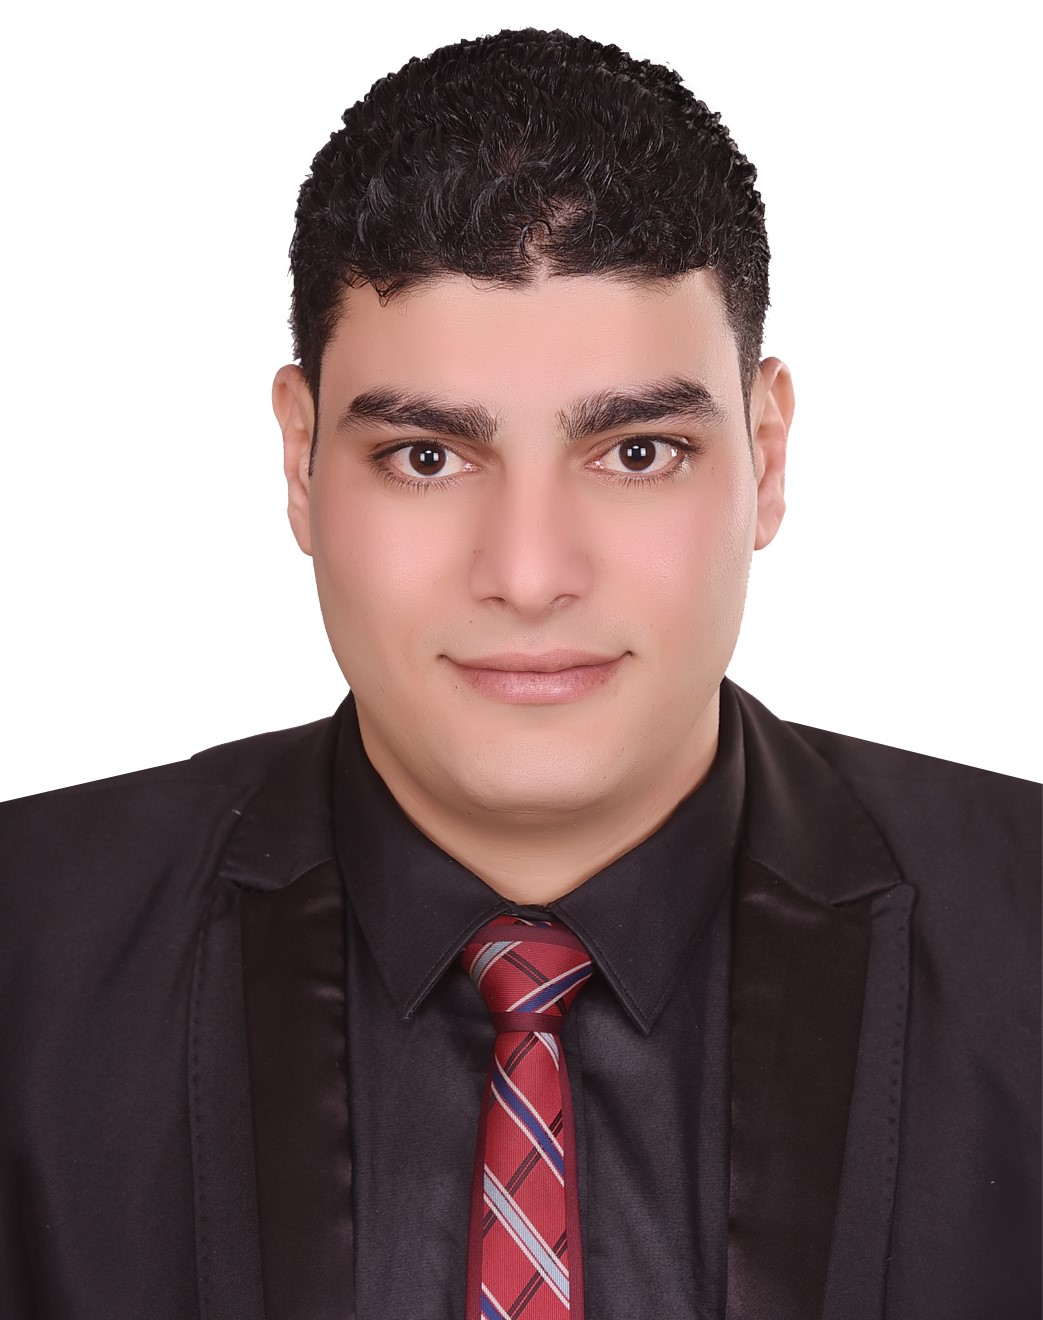 Amr Mohamed Soliman Ibrahim Mostafa